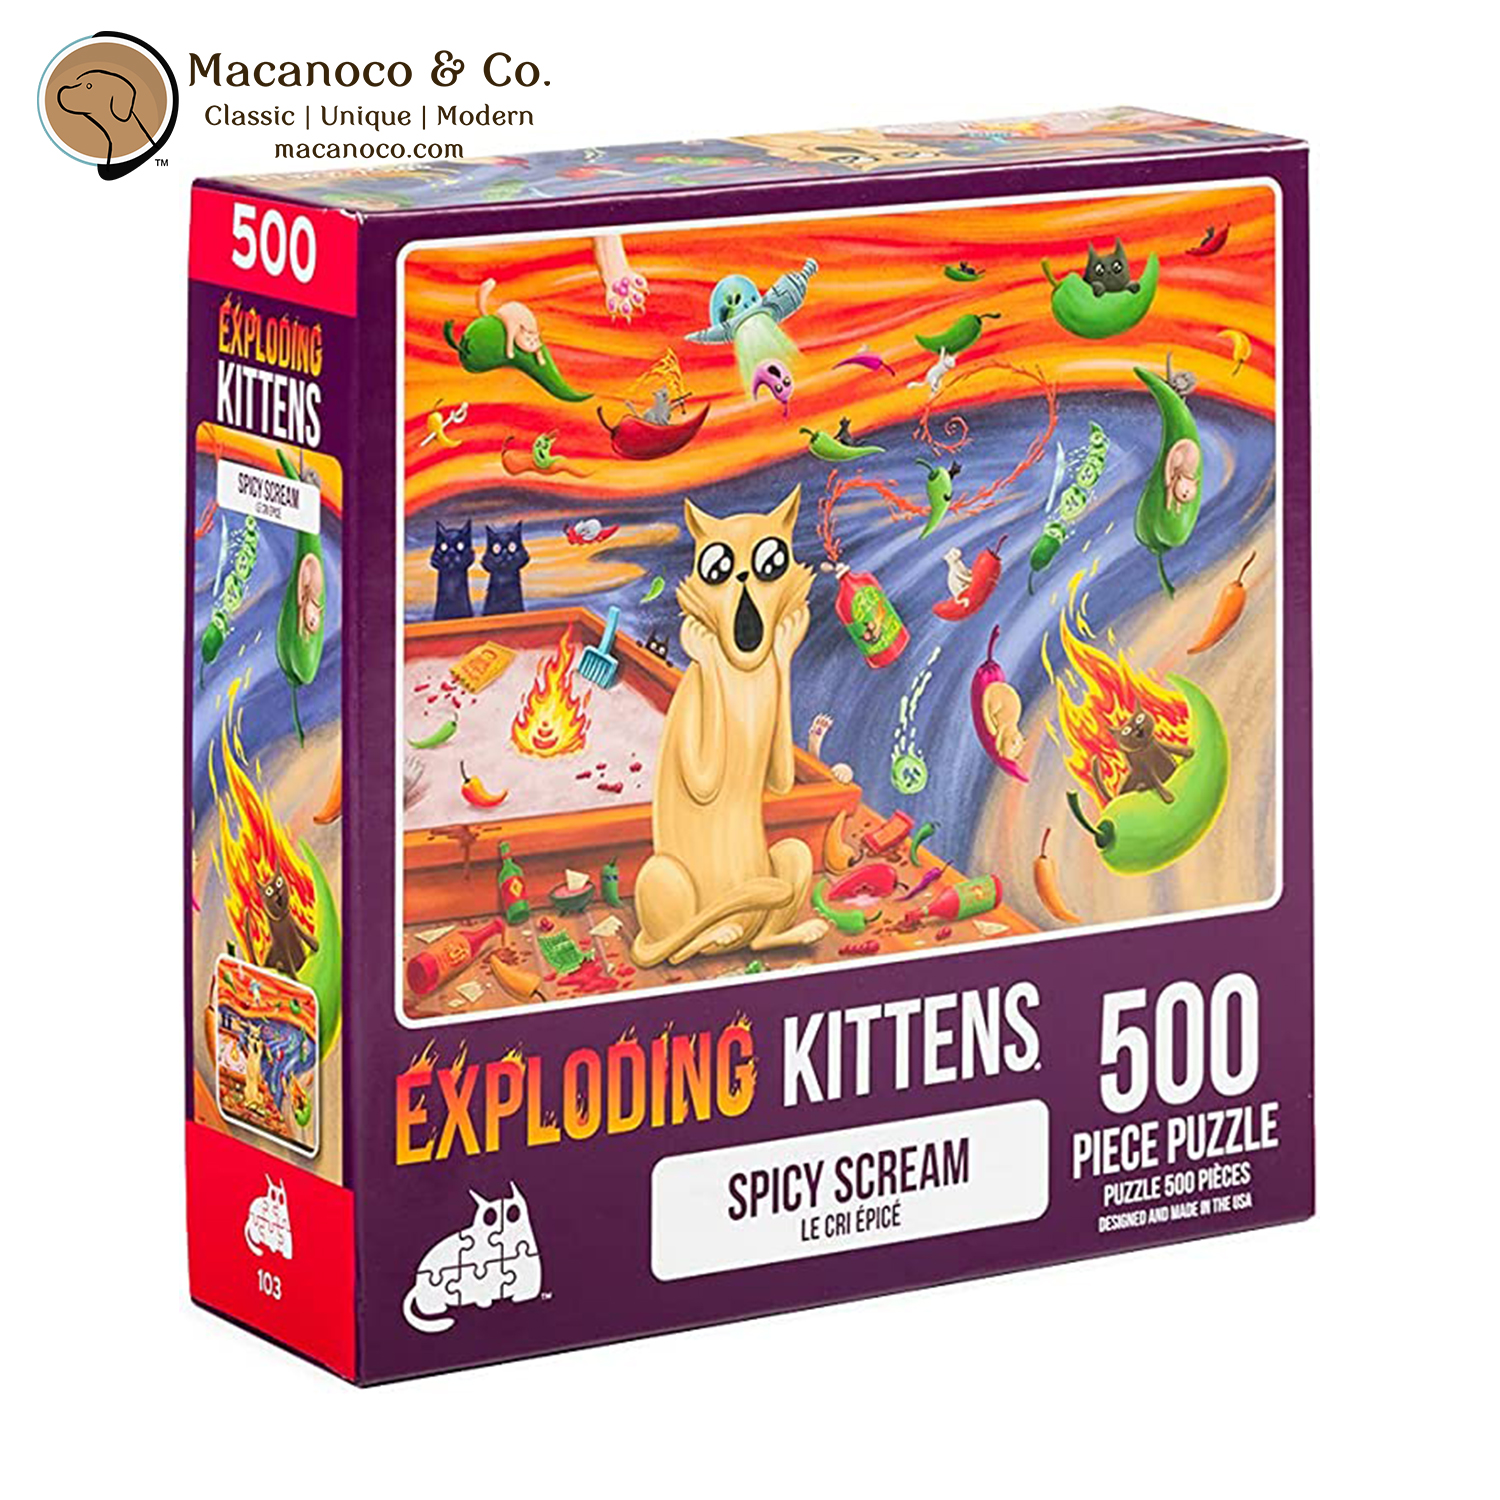 LUD-202106-1 Exploding Kitties 500 piece puzzle Spicy Scream